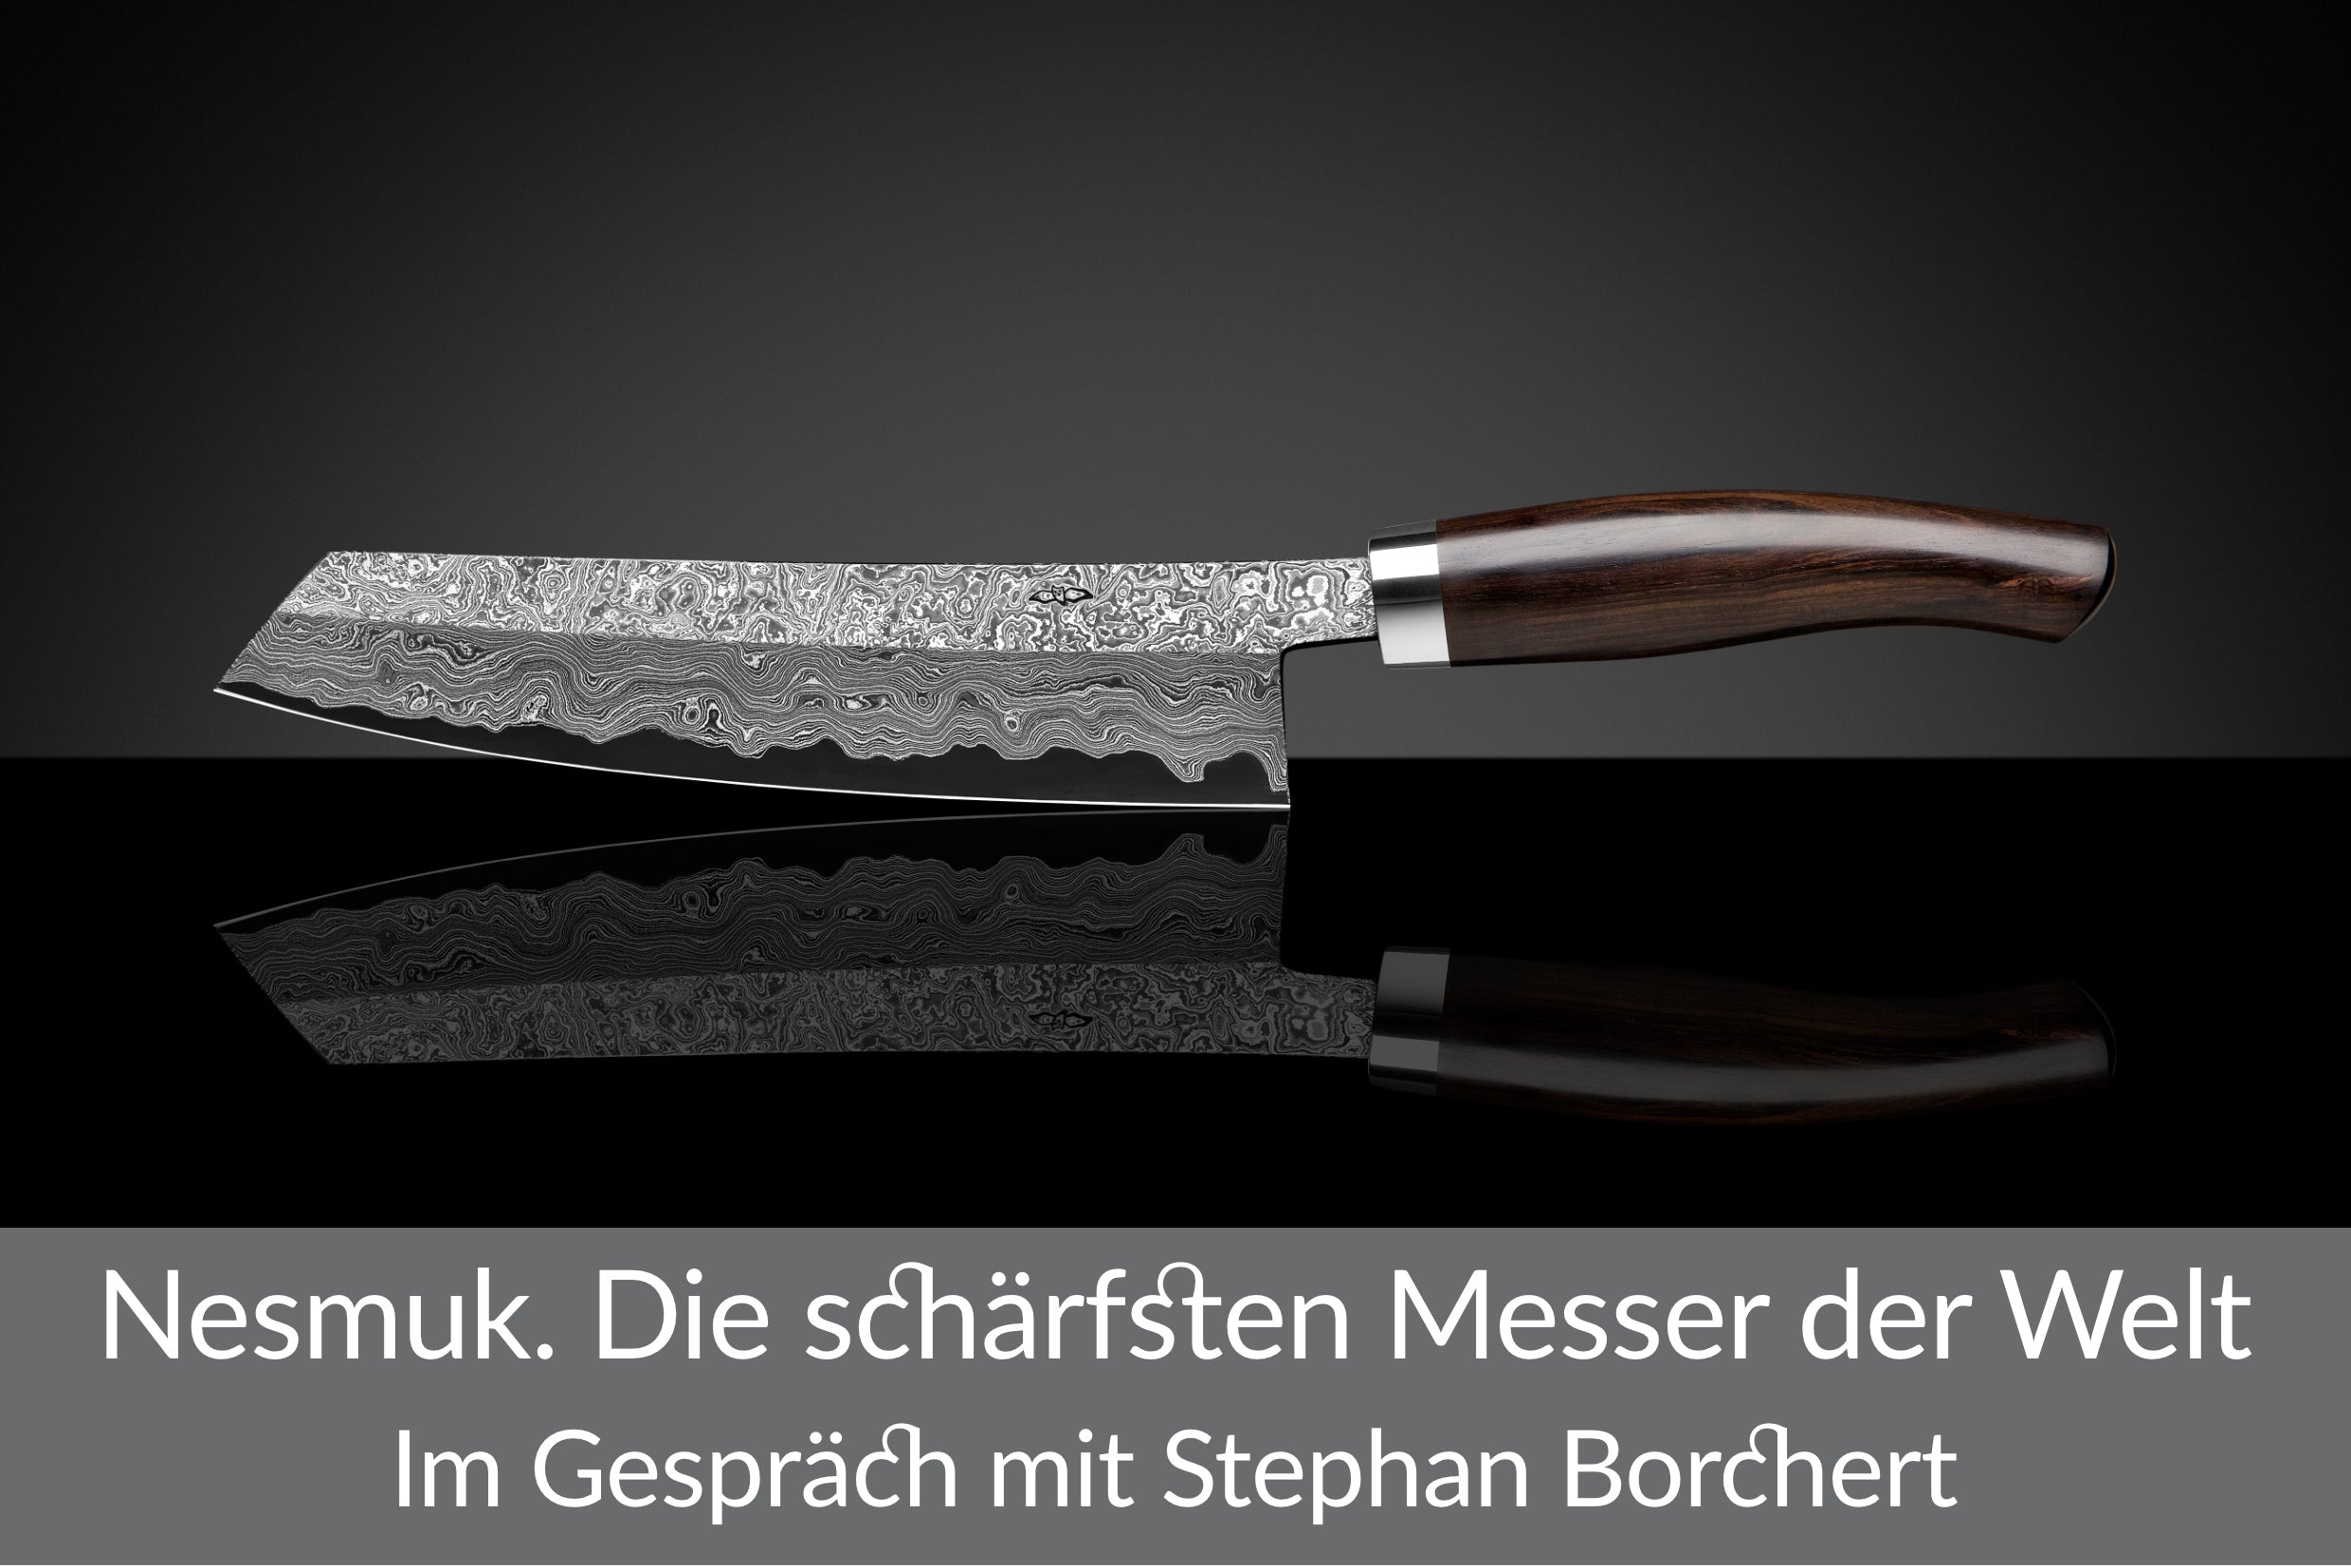 Nesmuk Damaszener Kochmesser Exklusiv C 90 - Interview mit Stephan Borchert 